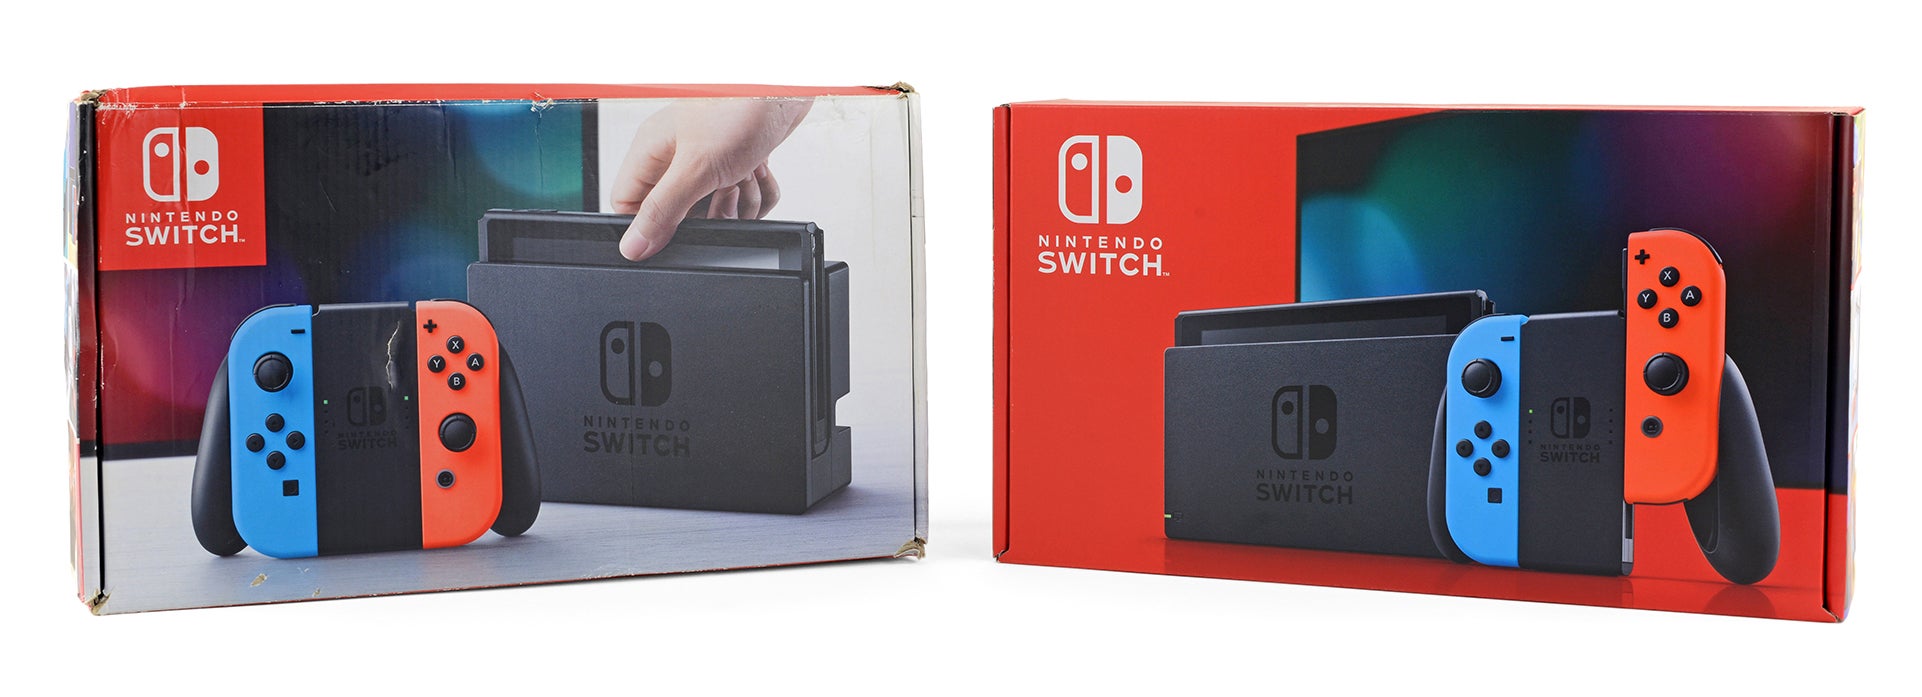 Nintendo switch old. Nintendo Switch 2. Нинтендо свитч 2017. Коробка Нинтендо свитч 2. Nintendo Switch v1.